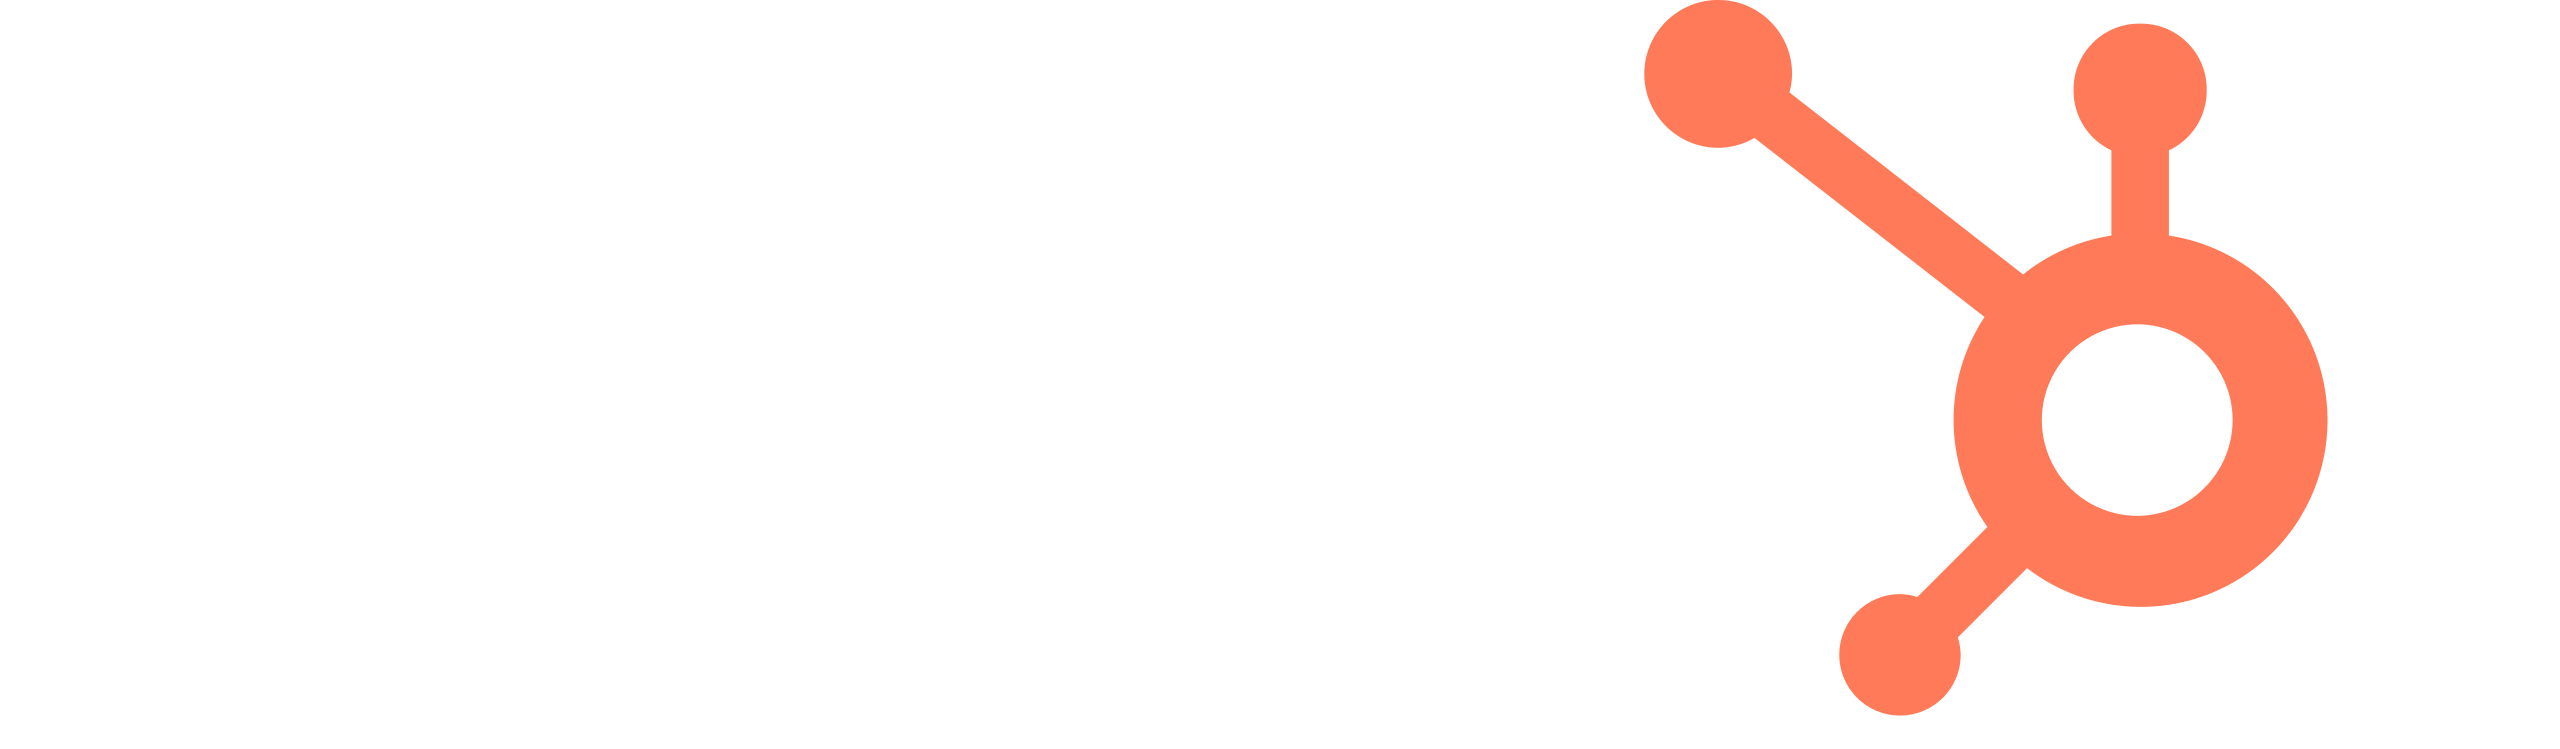 Hubspot Logo White